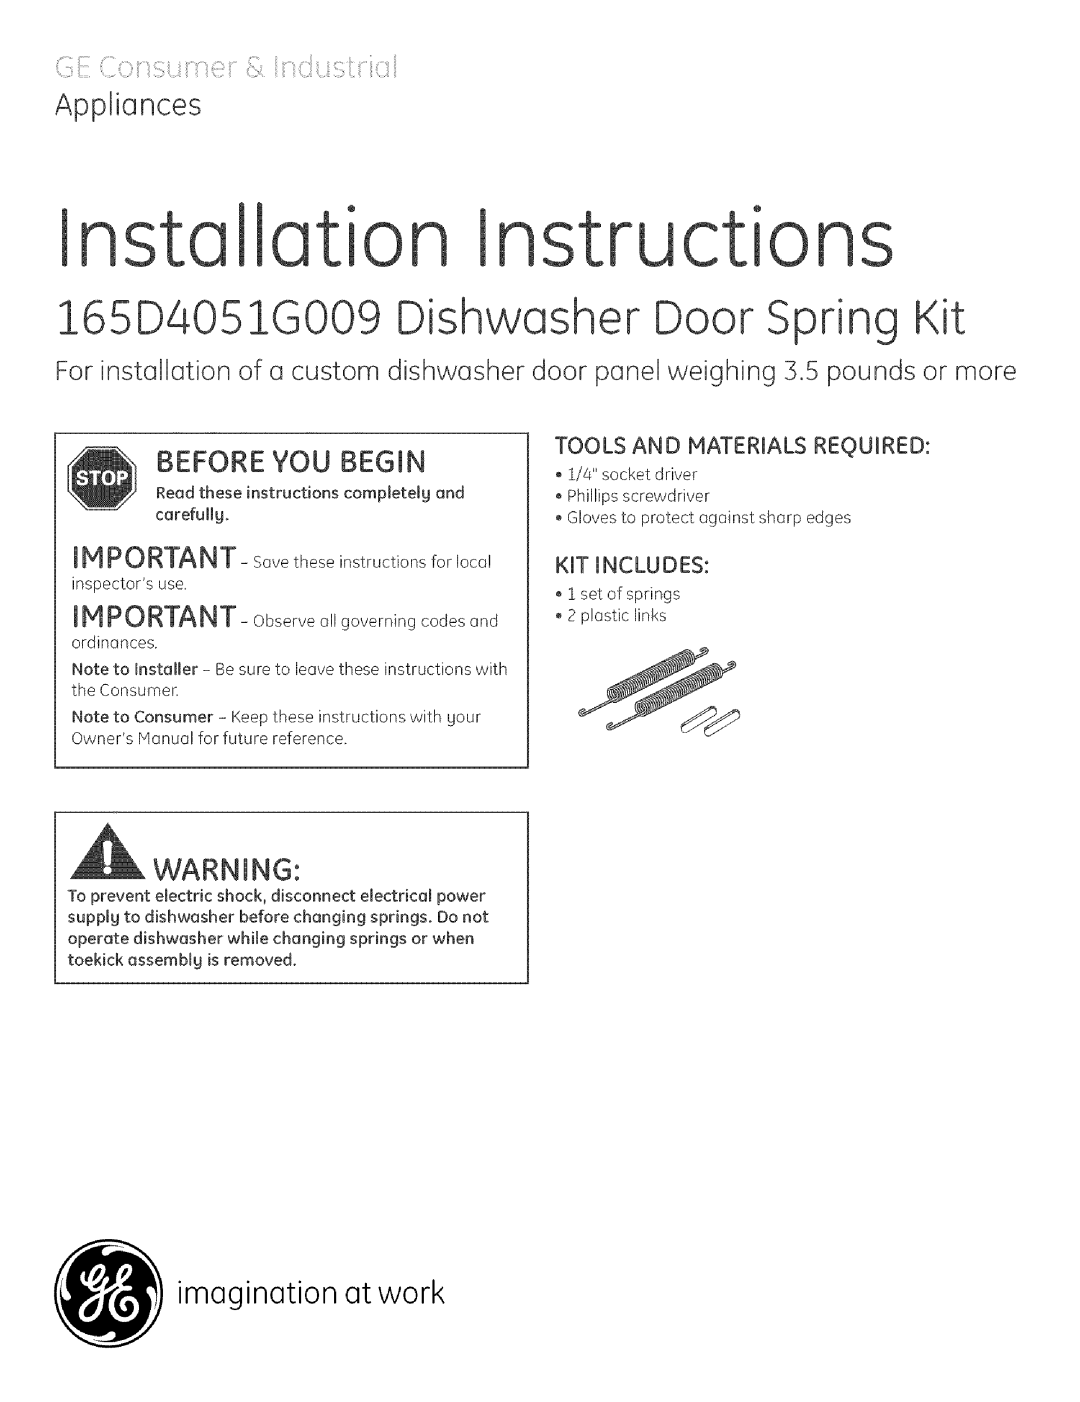 GE 165D4051G009 installation instructions Appliances, ination atwork imag, Installation Instructions 